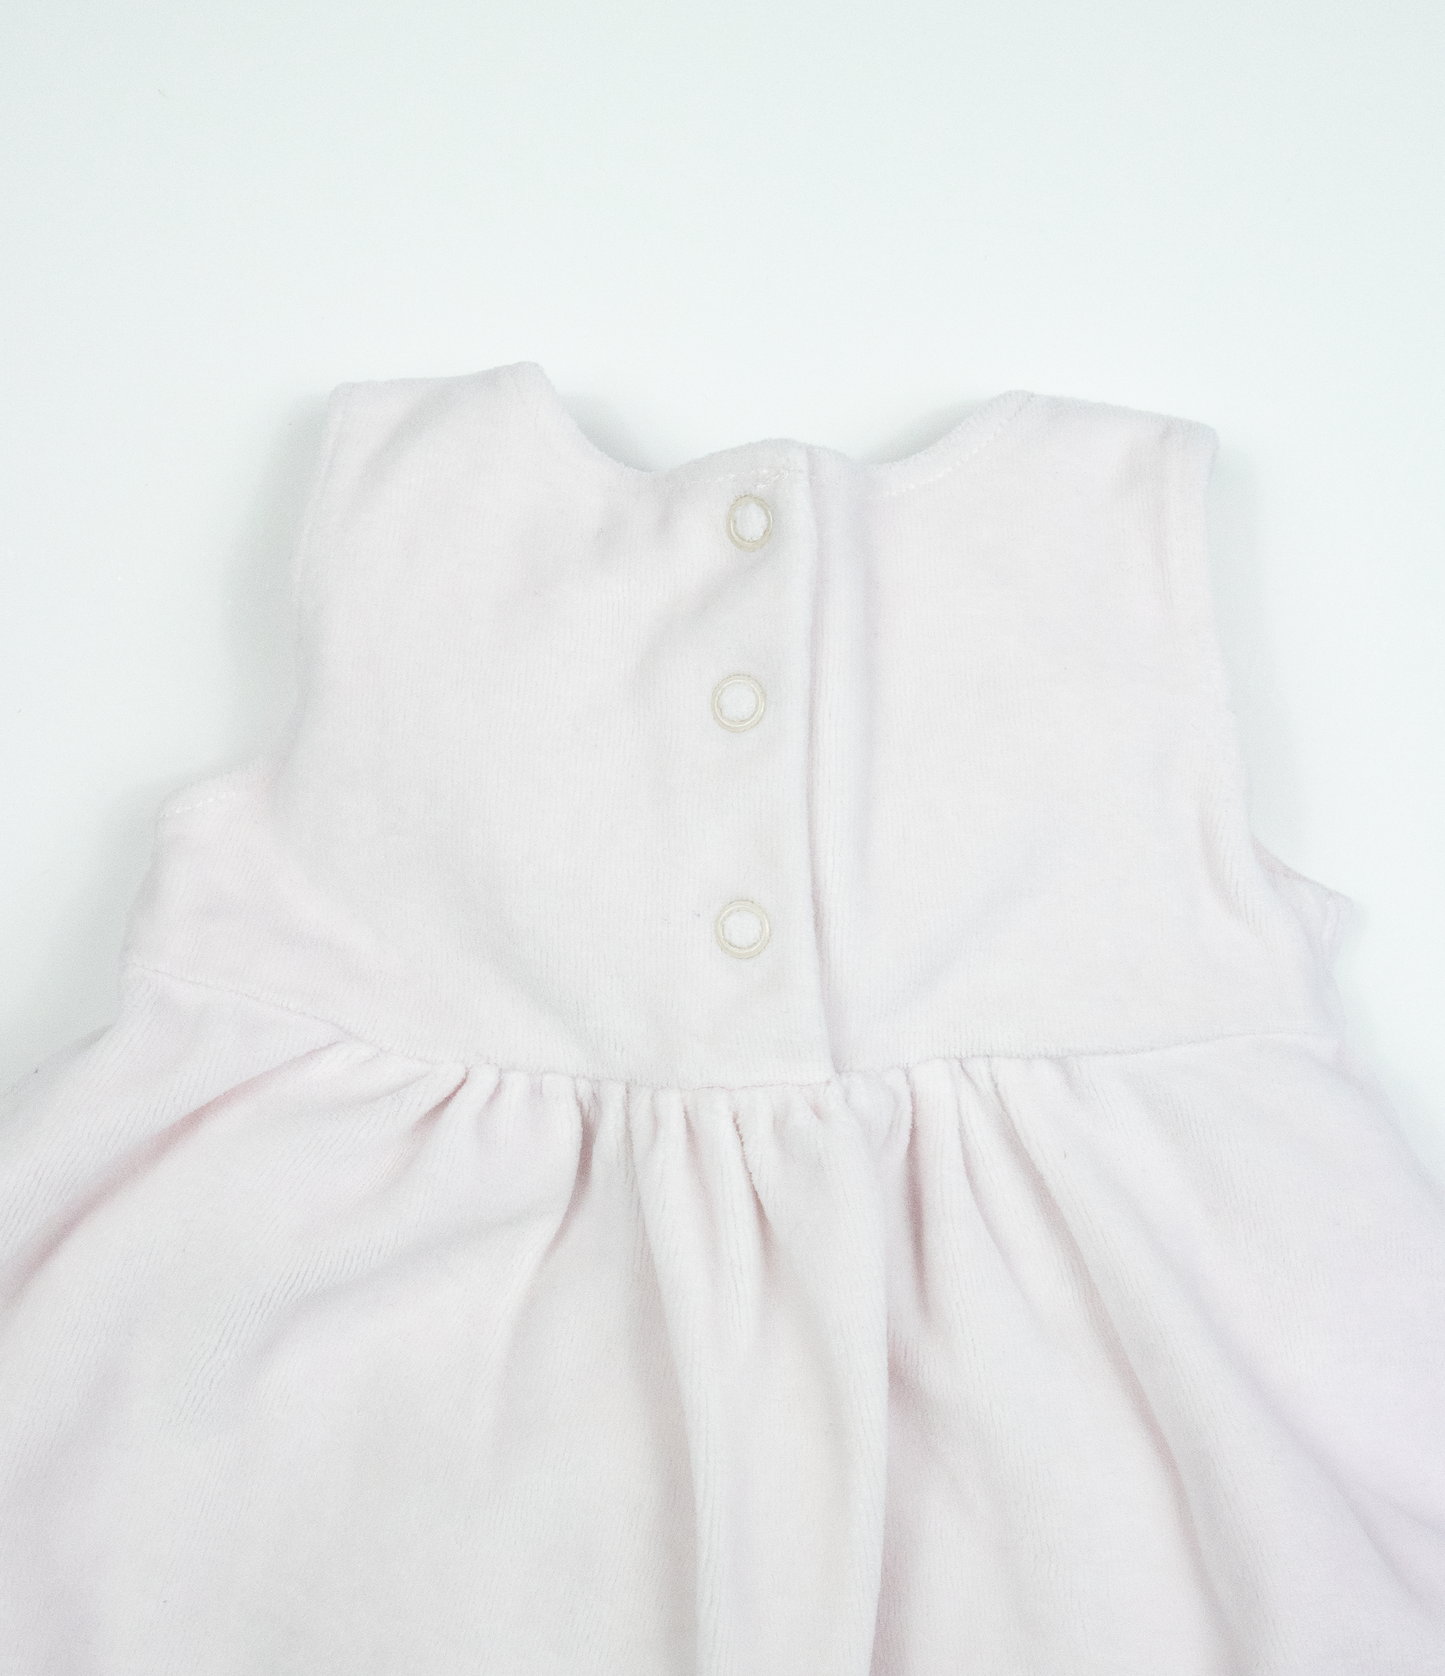 Pale pink velour dress